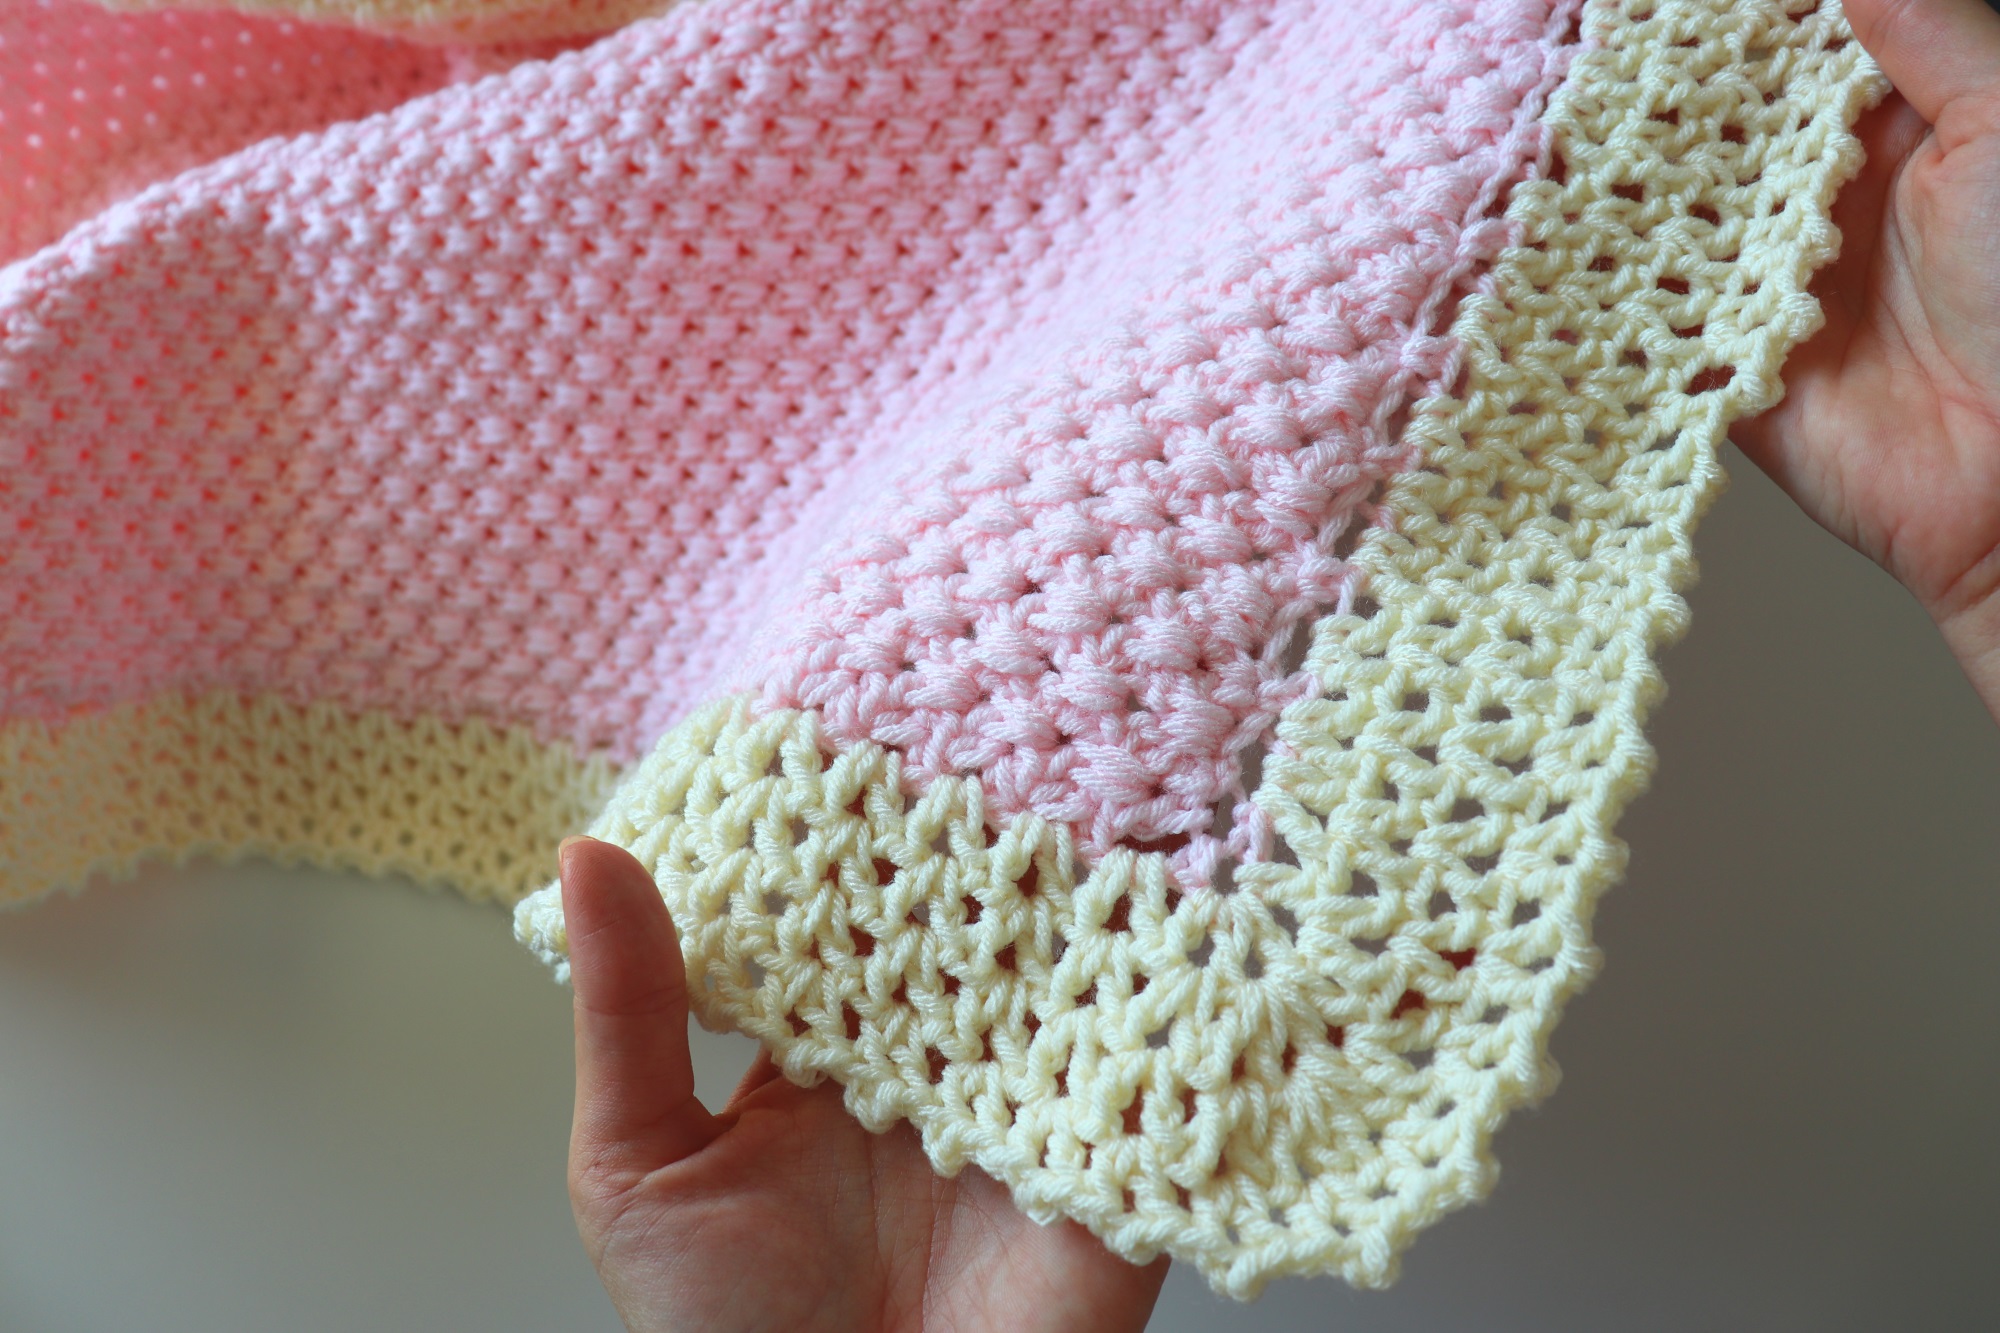 How To Crochet Easiest Beginner Baby Blanket